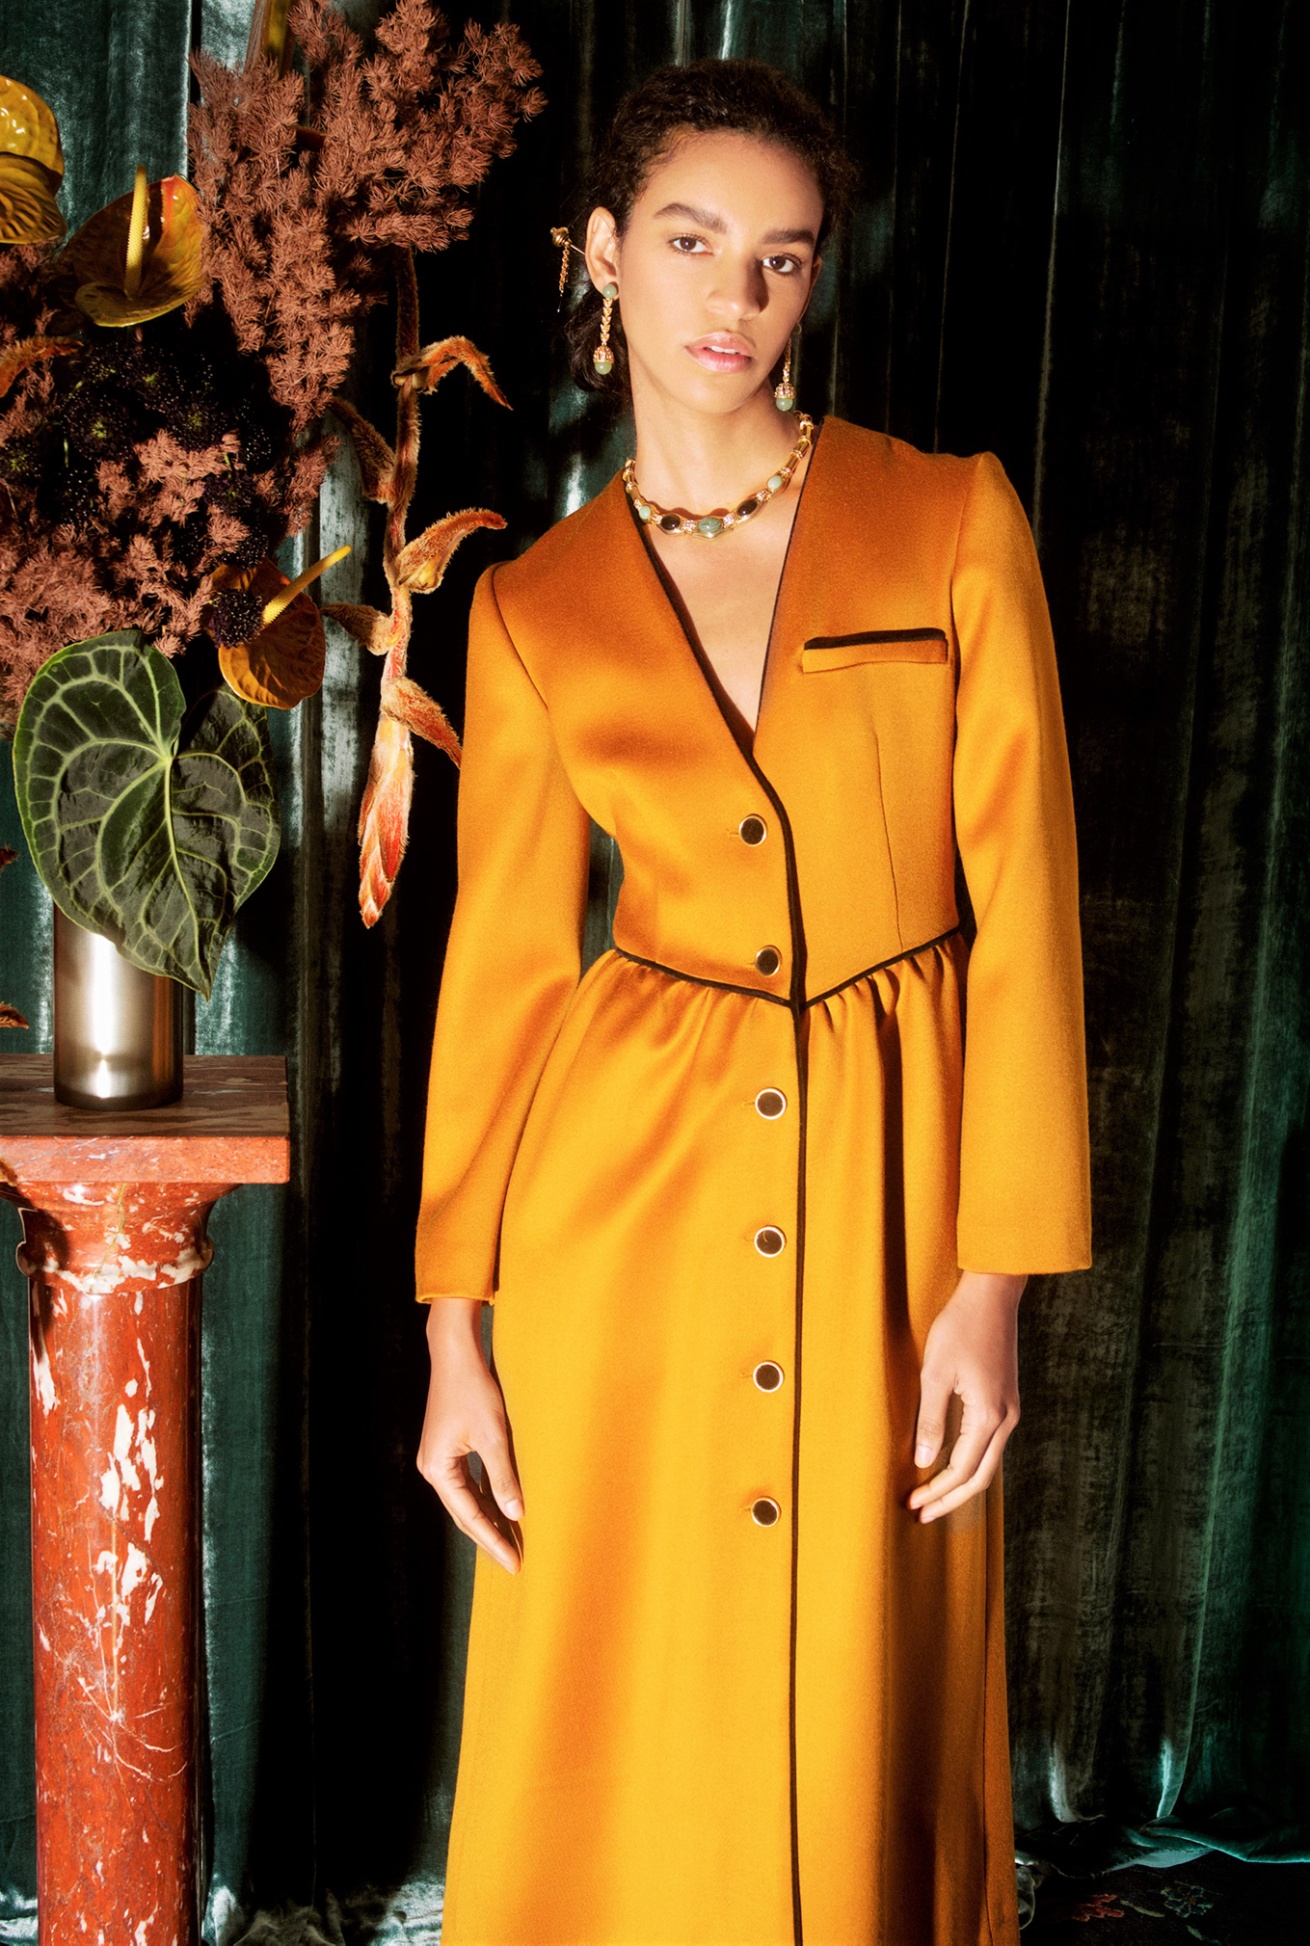 NYFW Markarian Fall 2-21 Vogue gold dress cropped.jpg